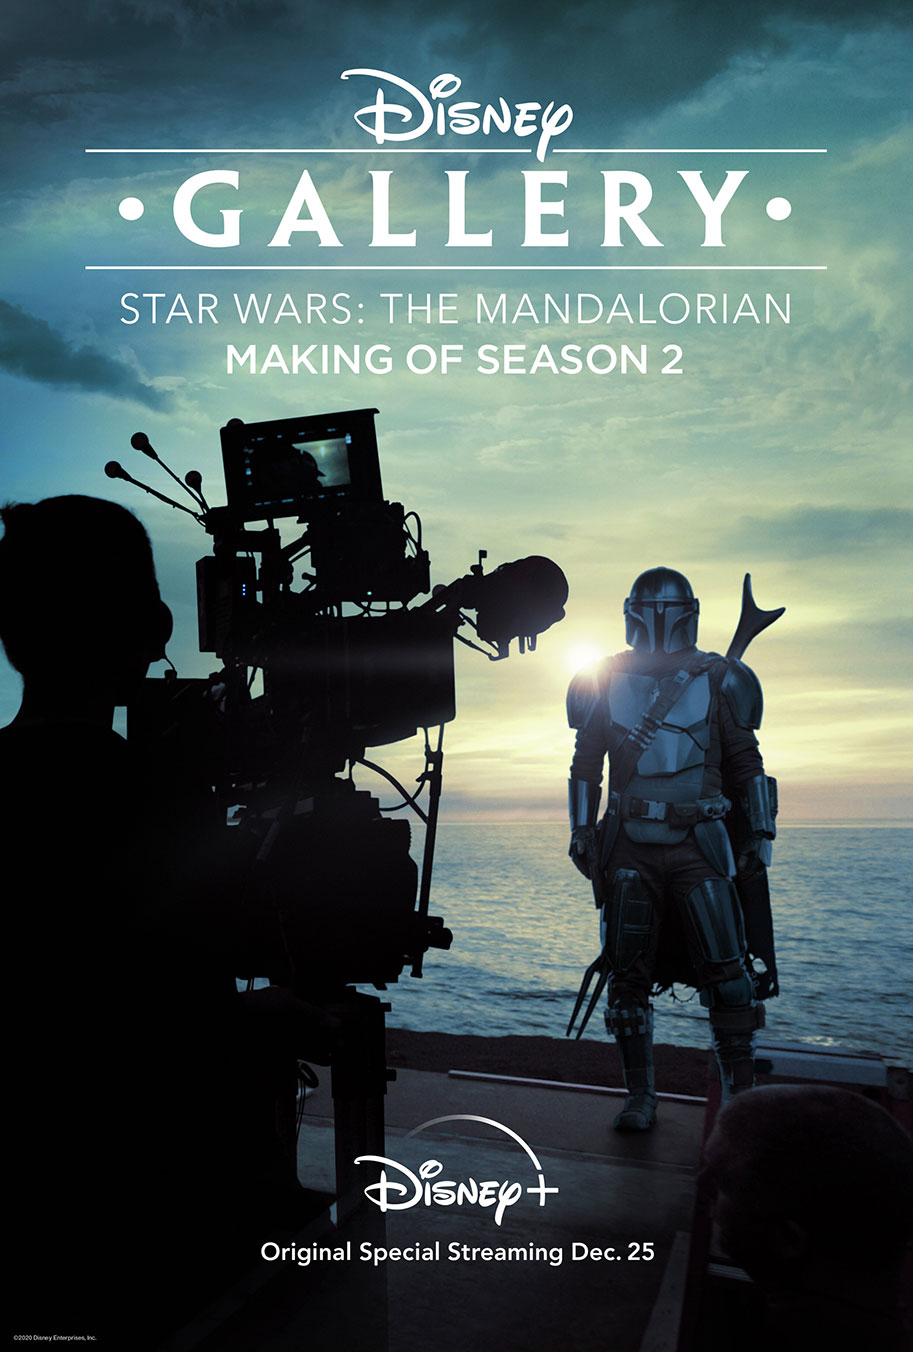 The Mandalorian, Disney Gallery, Disney Plus, Star Wars, Season 2